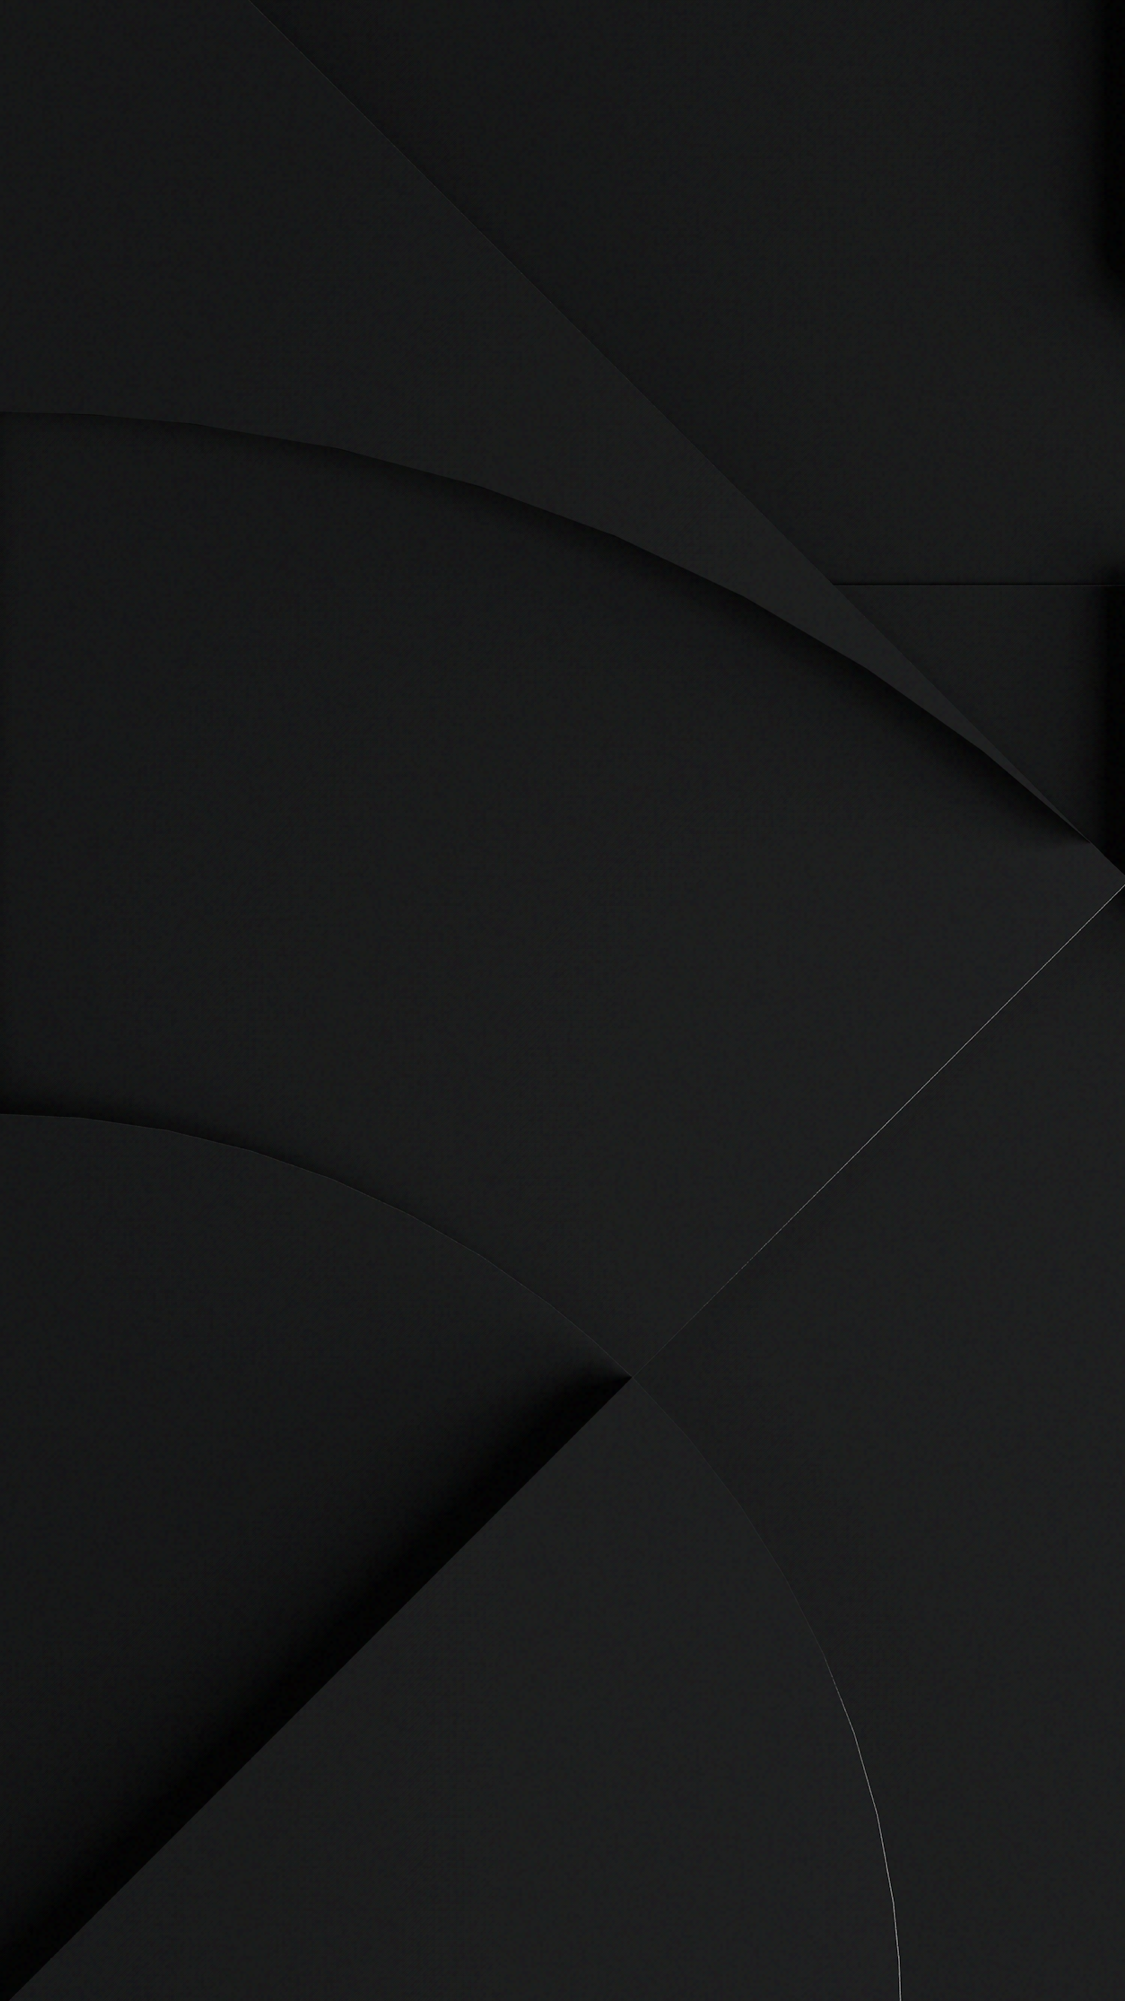 Black Geometric Mobile Wallpapers - Wallpaper Cave